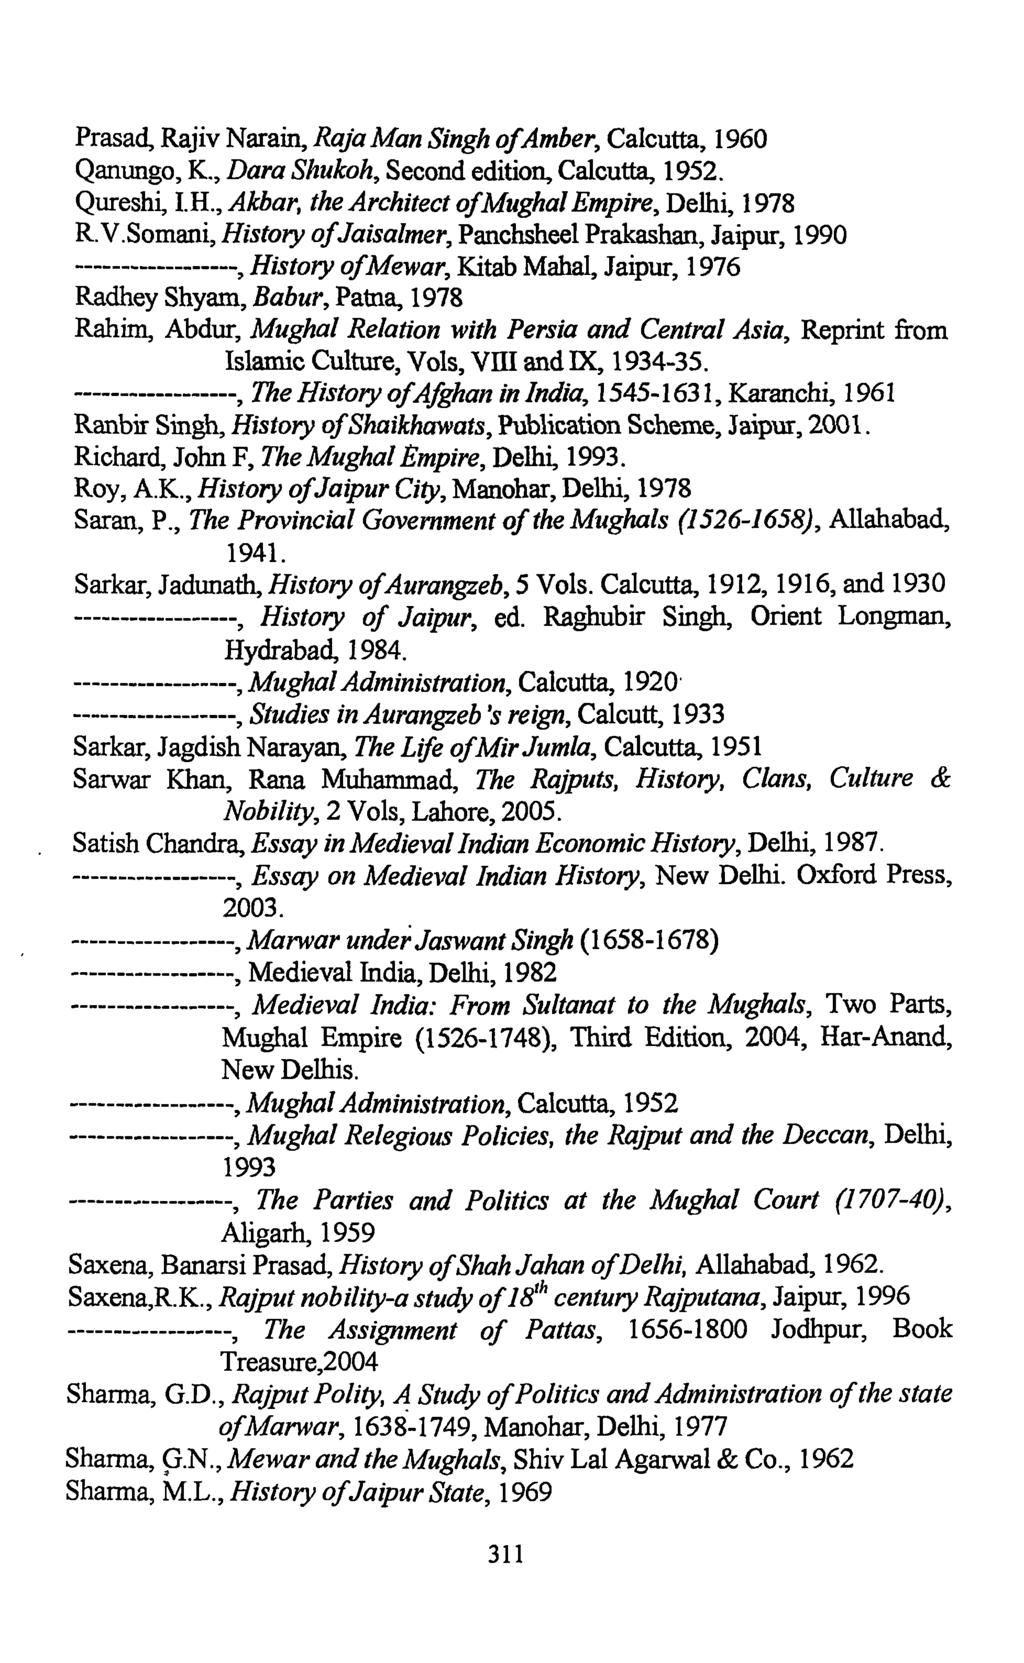 Prasad, Rajiv Narain, Raja Man Singh of Amber, Calcutta, 1960 Qanungo, K., Dara Shukoh, Second edition, Calcutta, 1952. Qureshi, l.e.,akbar, the Architect of Mughal Empire, Delhi, 1978 R.V.